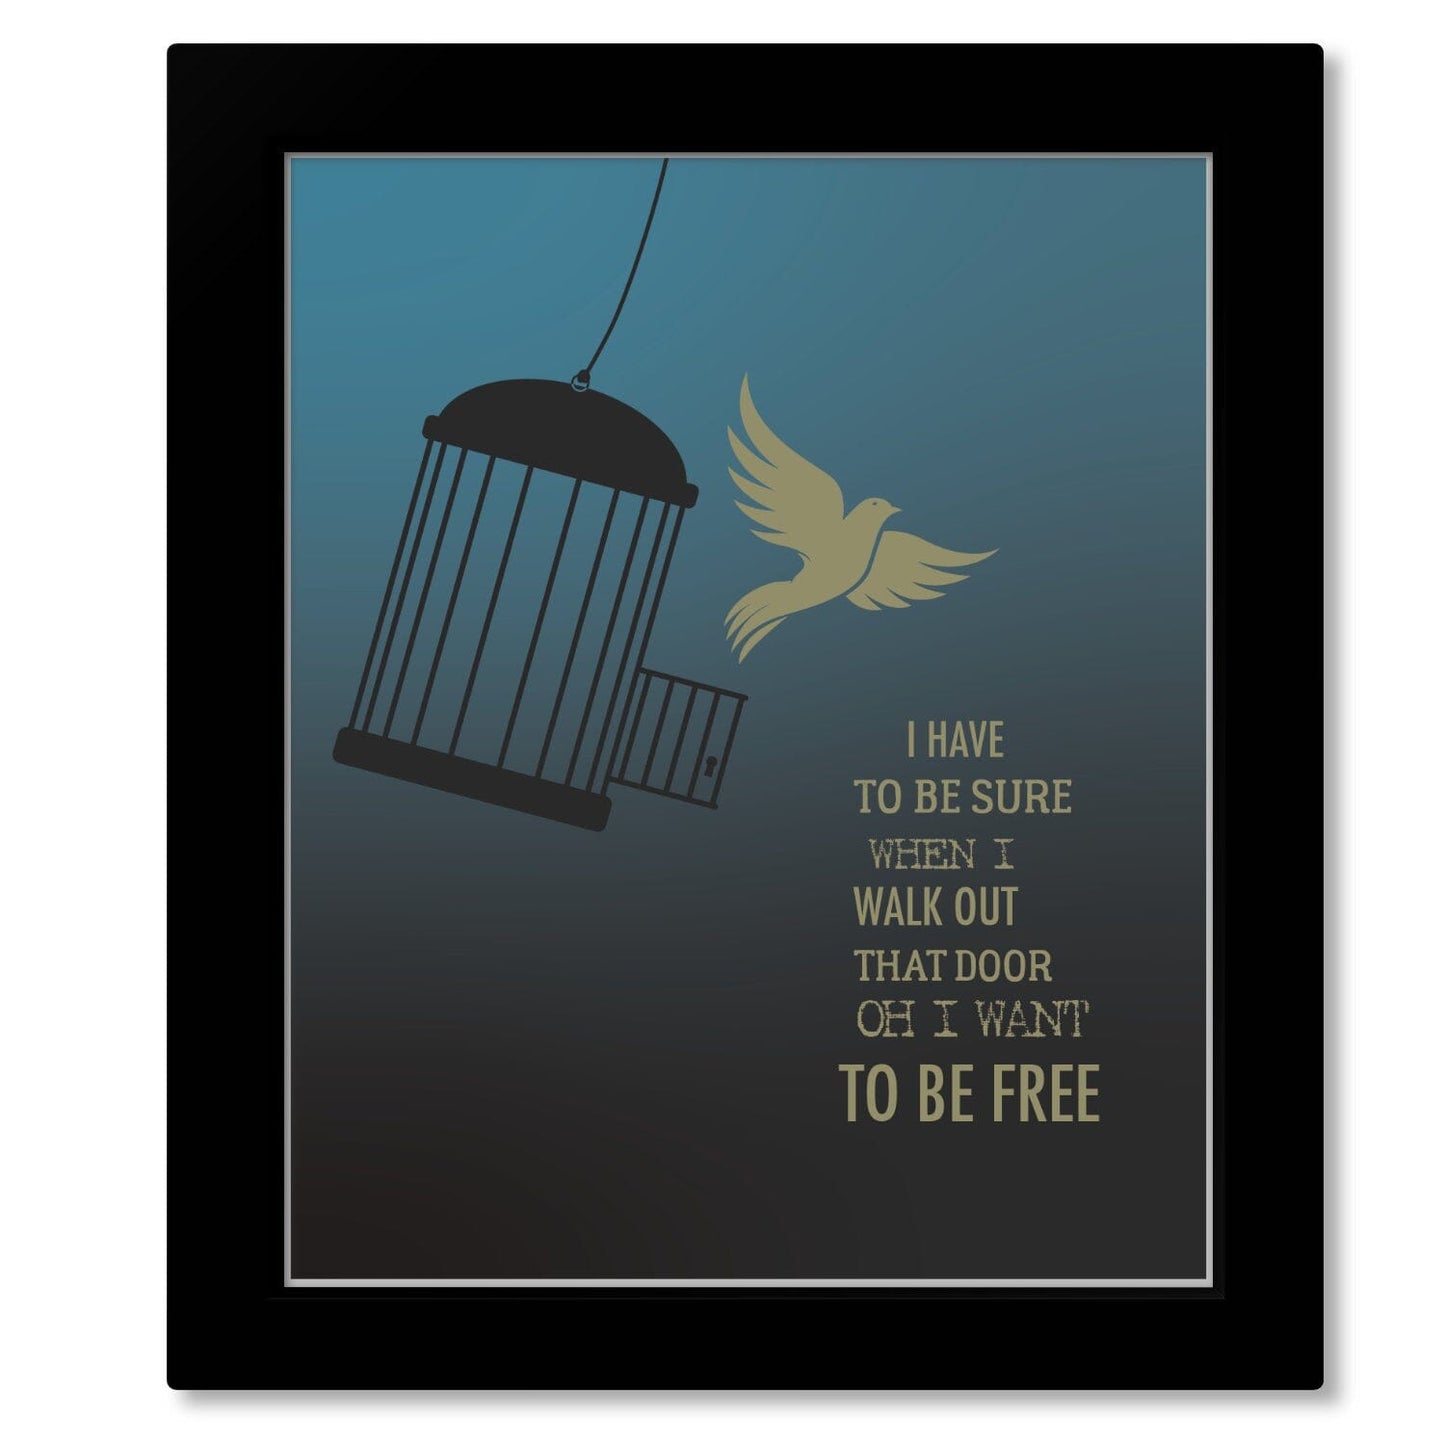 I Want to Break Free by Queen - Lyric Inspired Wall Art Rock Music Print Song Lyrics Art Song Lyrics Art 8x10 Framed Print (without mat) 